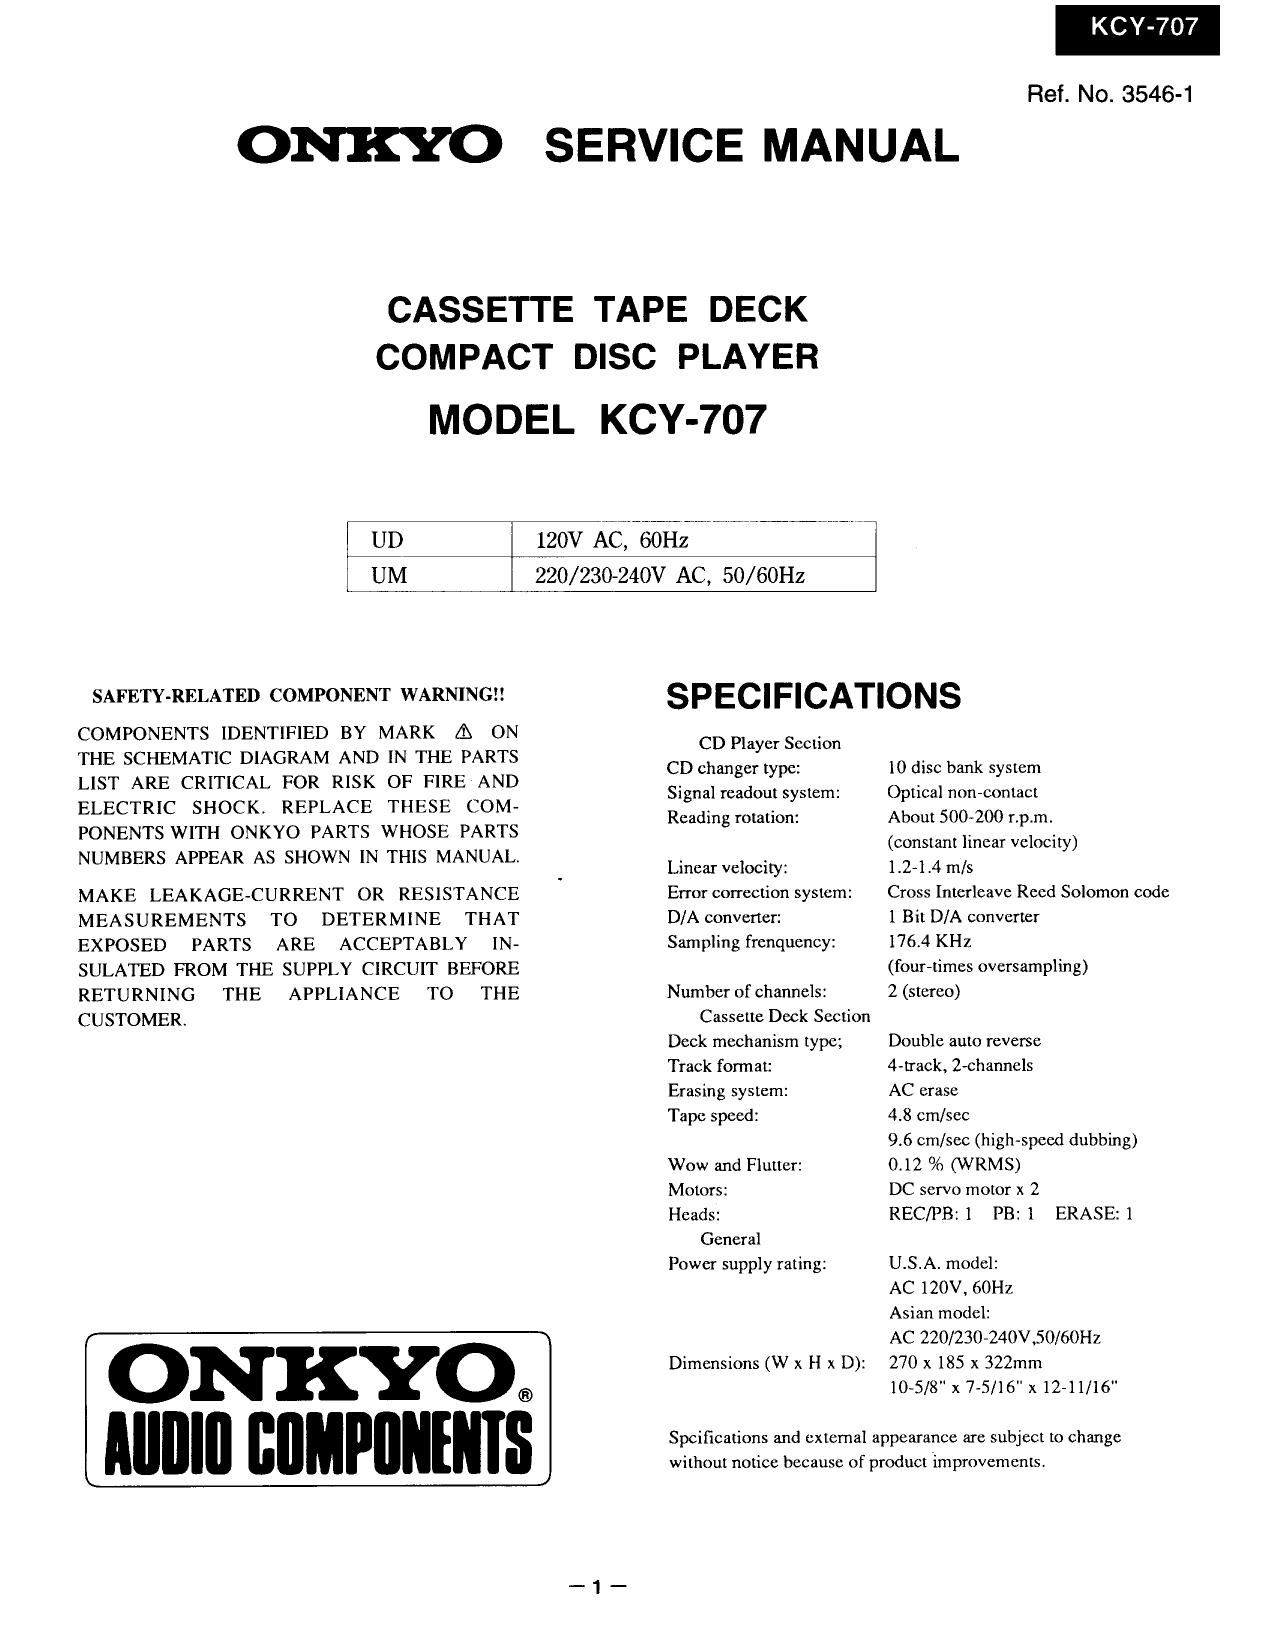 Onkyo KCY 707 Service Manual